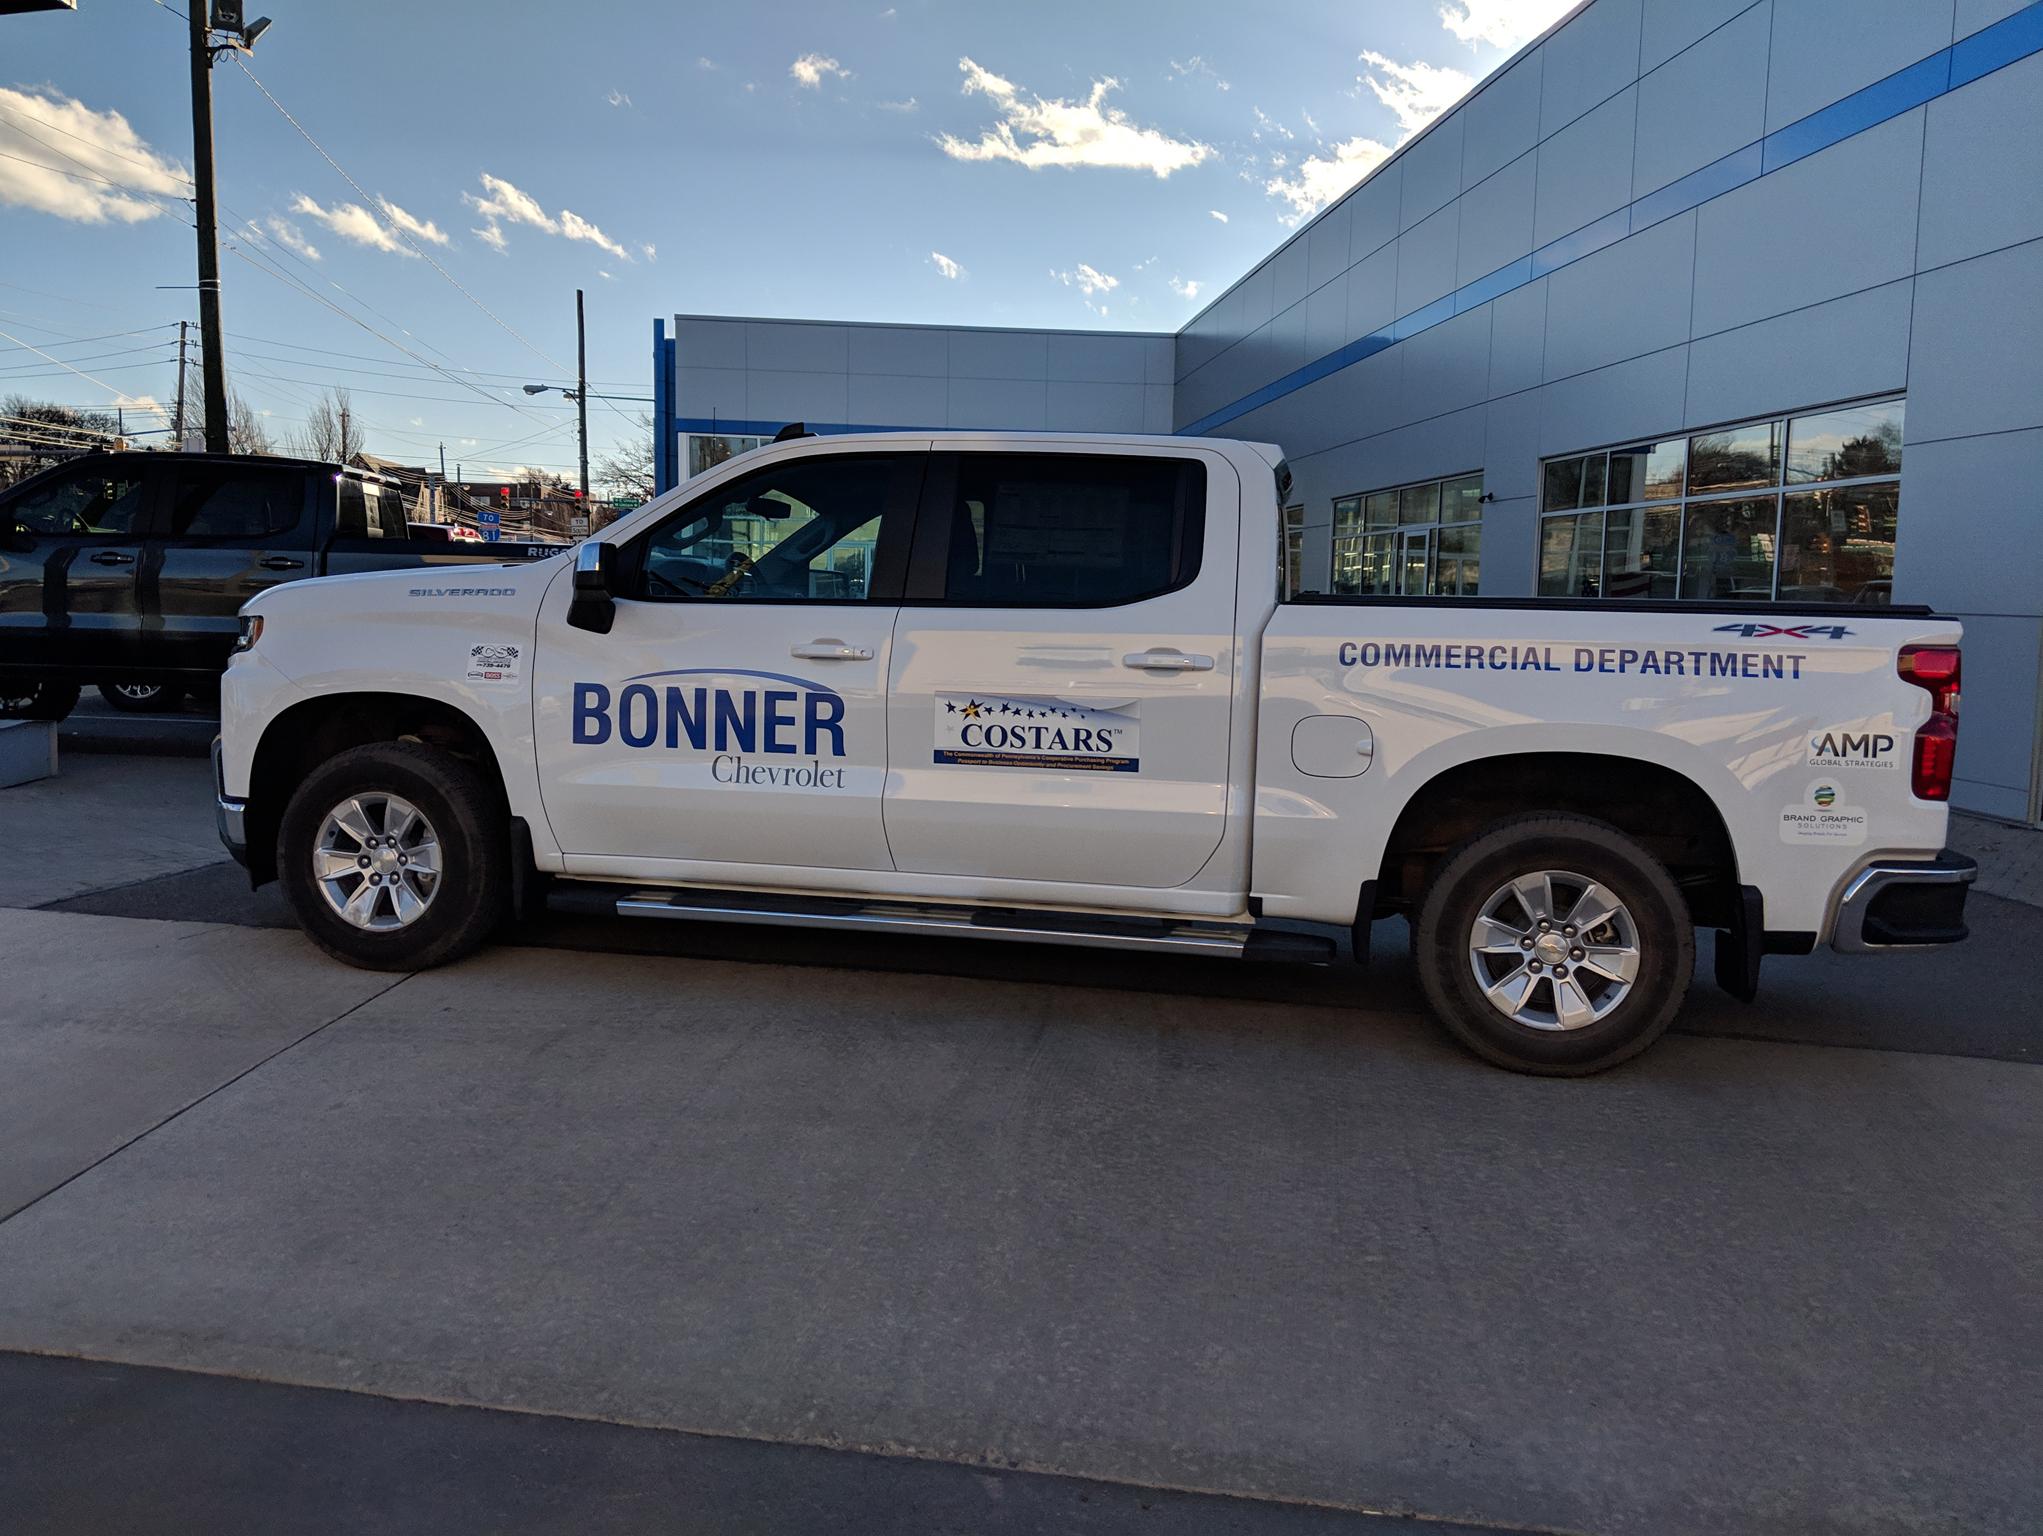 Bonner Chevrolet is a COSTARS/Commercial dealer. 